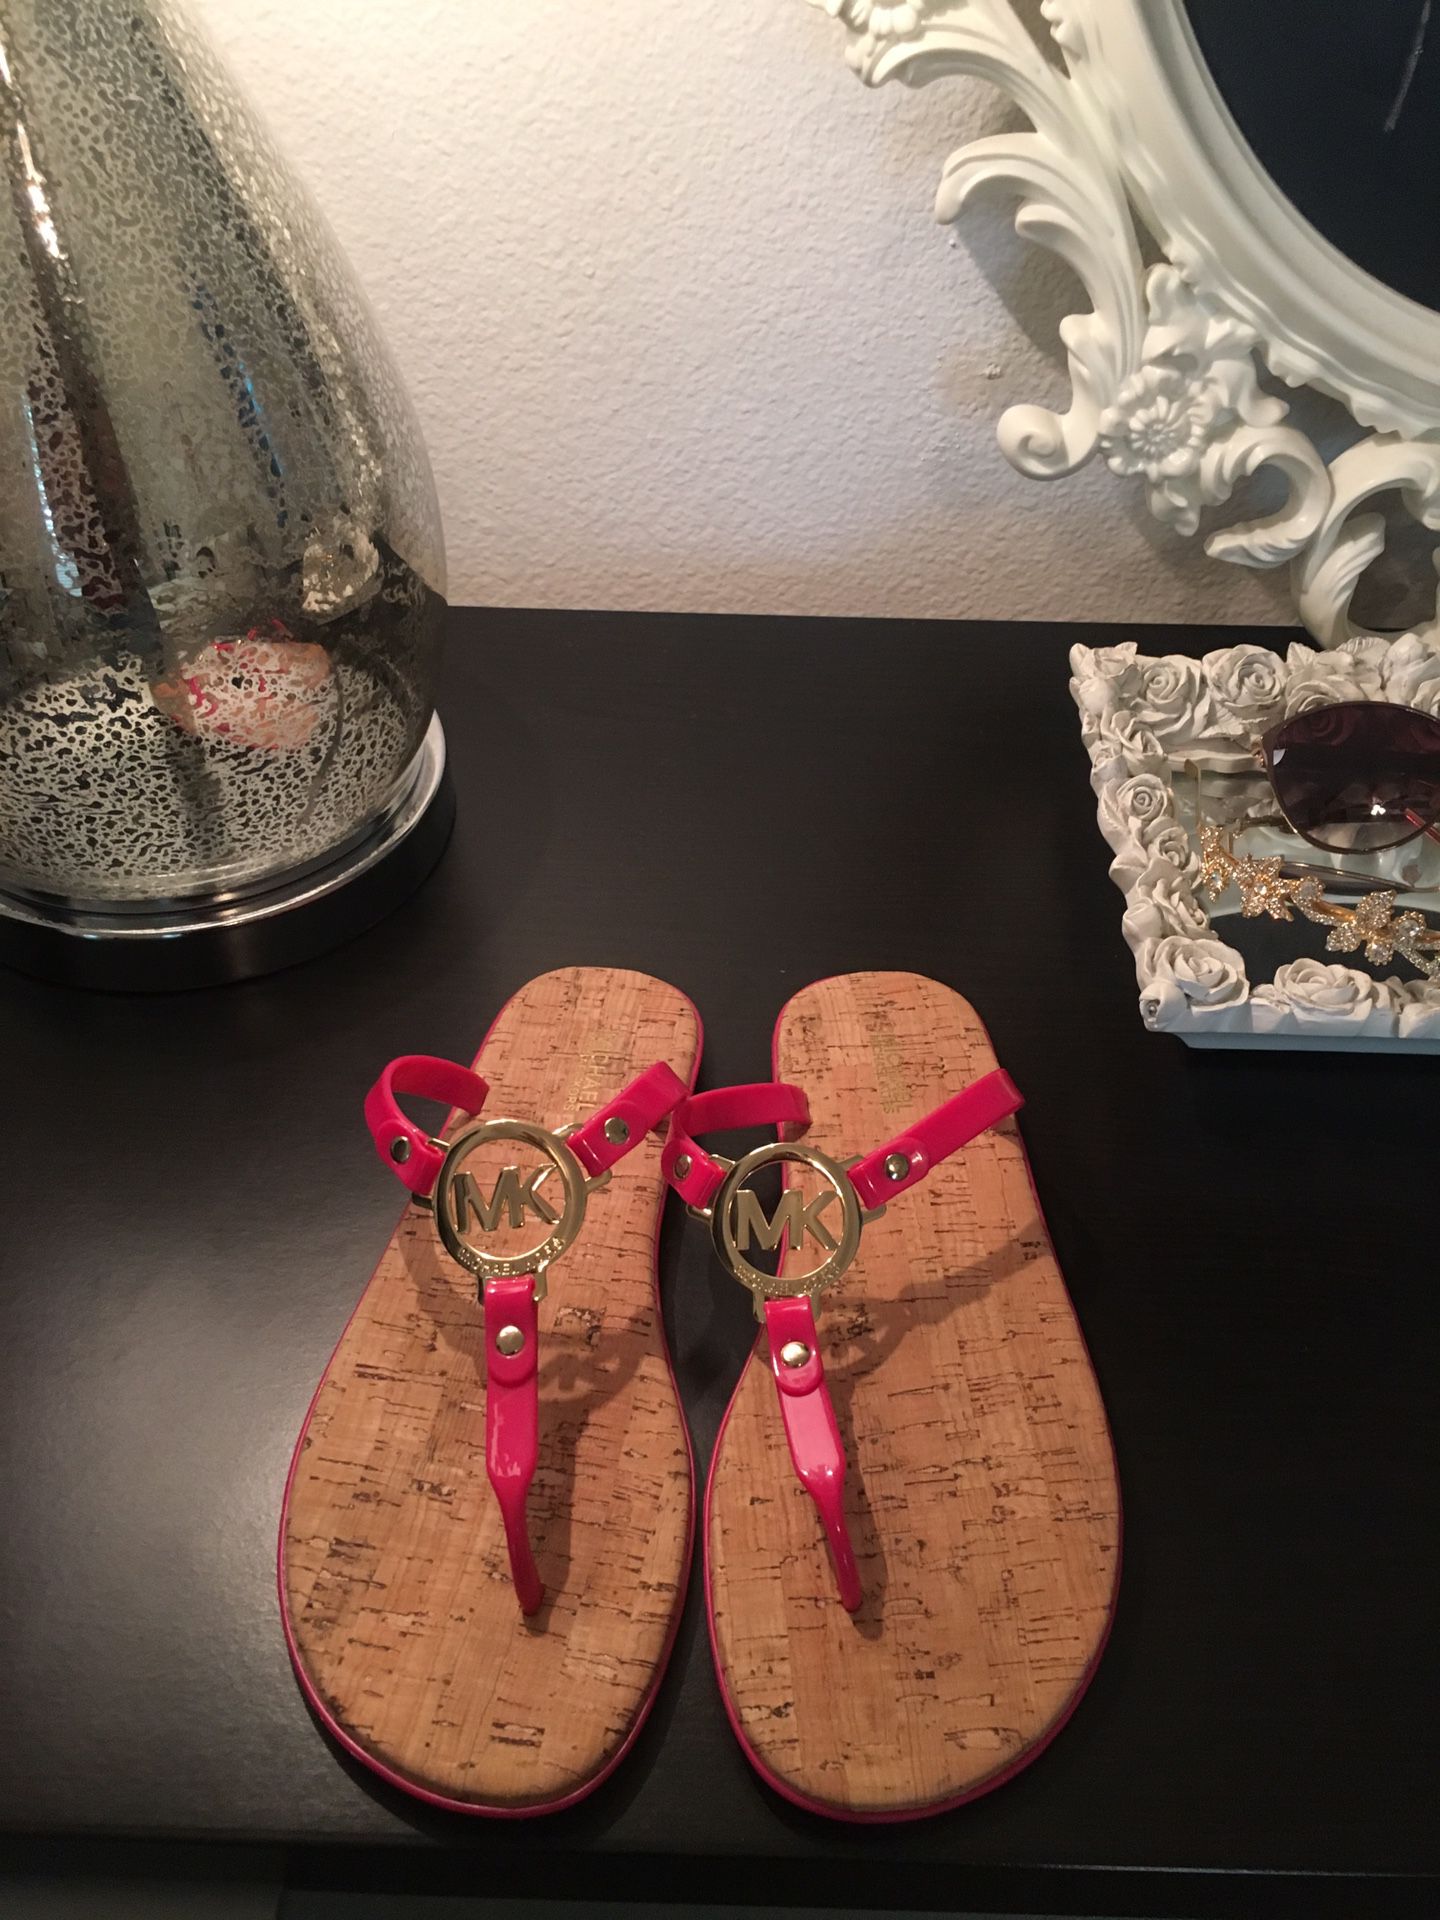 Michael Kors sandals.